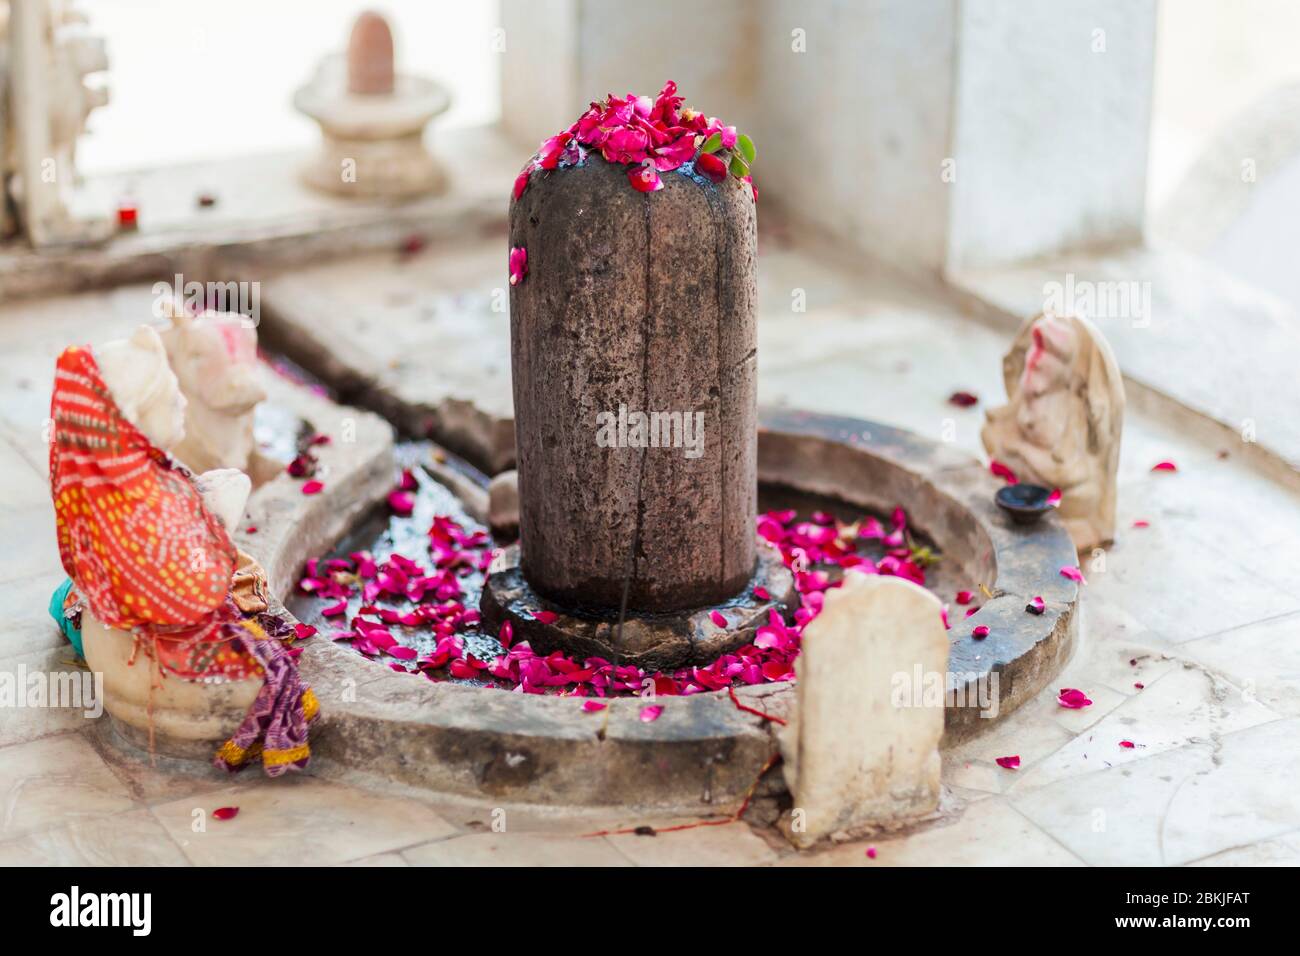 India, Rajasthan, Pushkar, close-up of a yoni, sculpture symbolizing the female genital organ Stock Photo